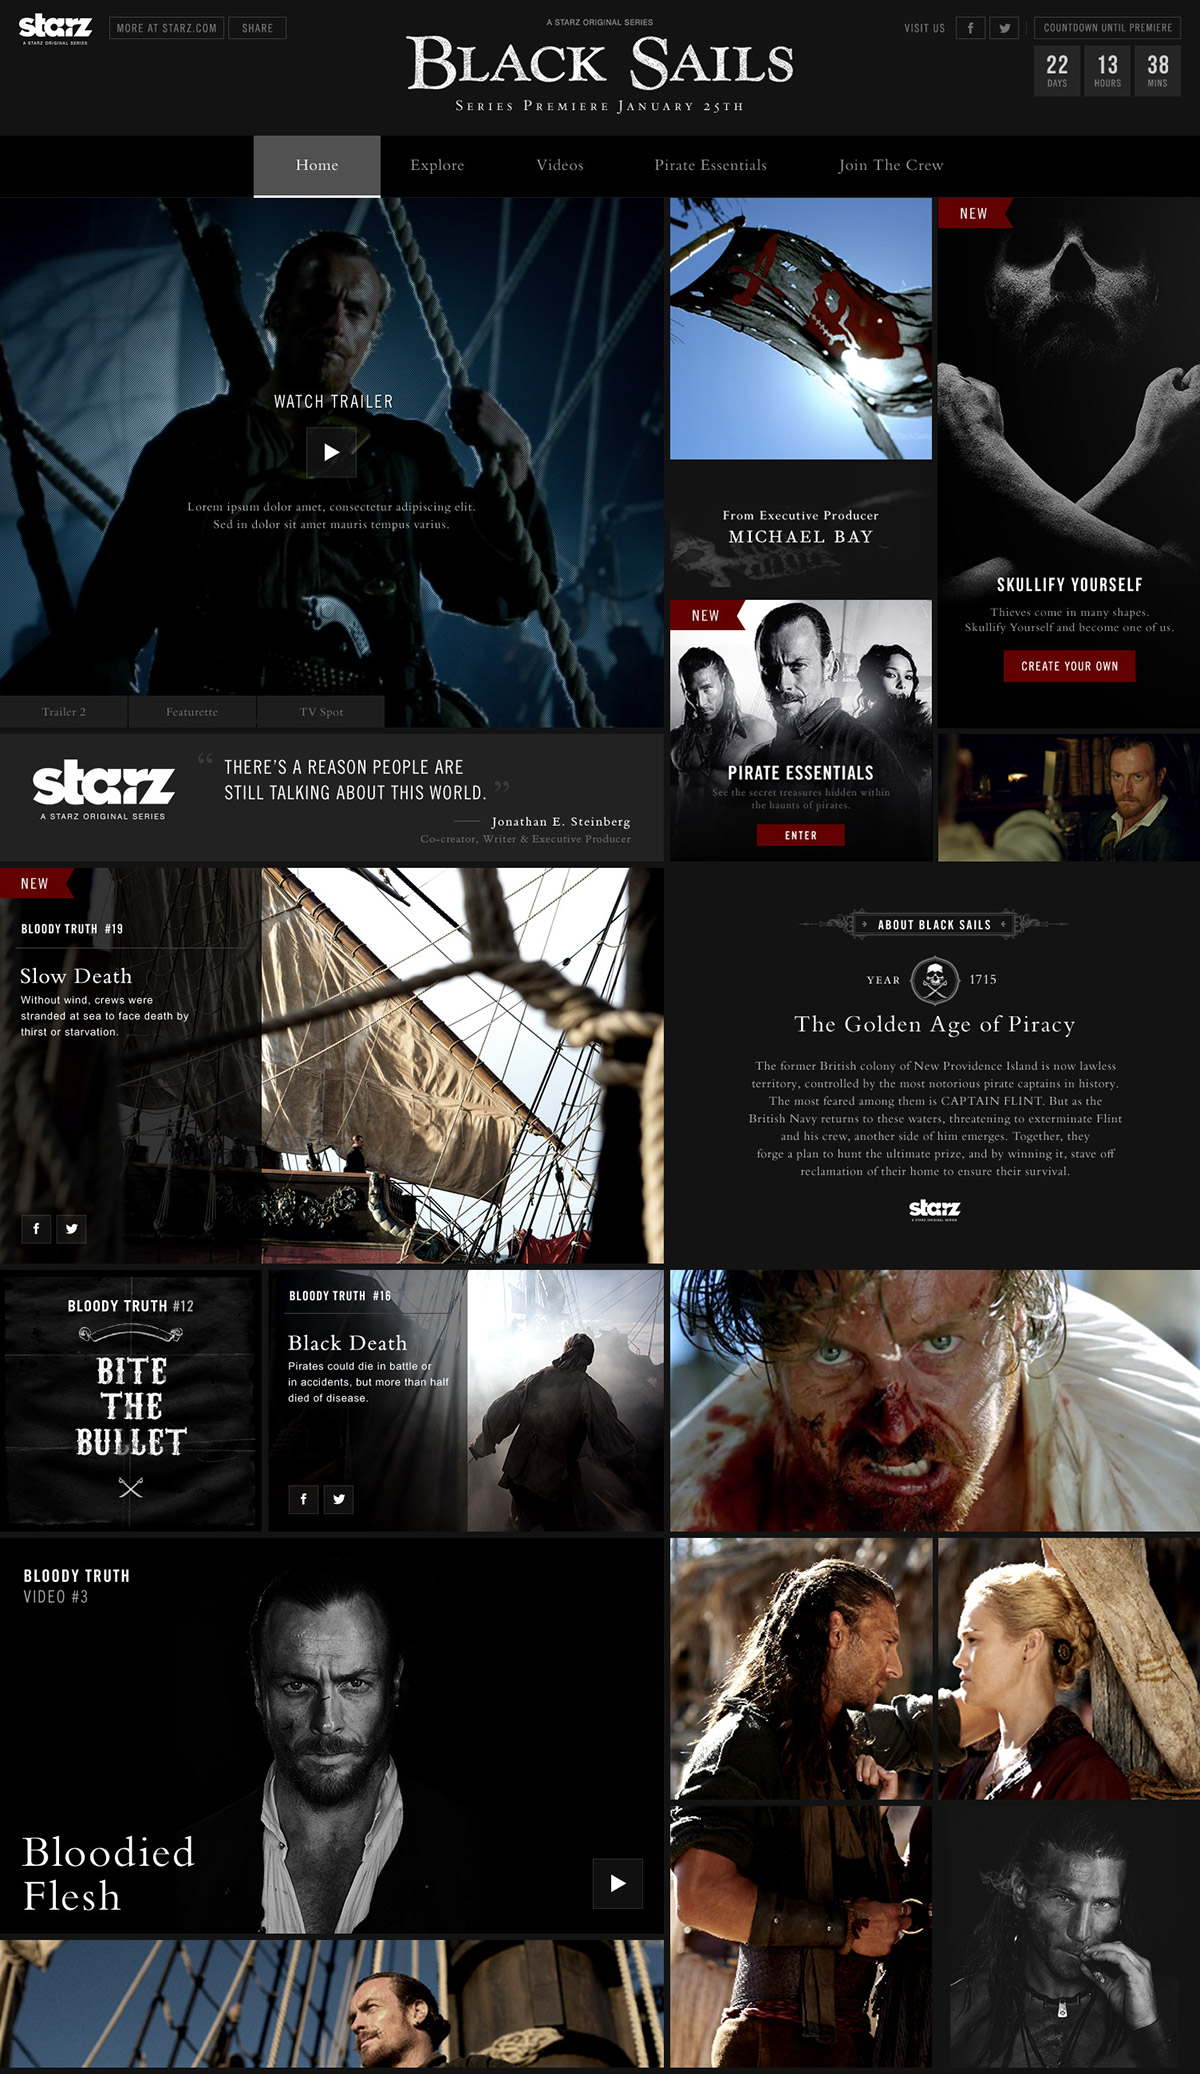 Adobe Portfolio Black Sails tv show pirates ship Starz dark death captain skull blood